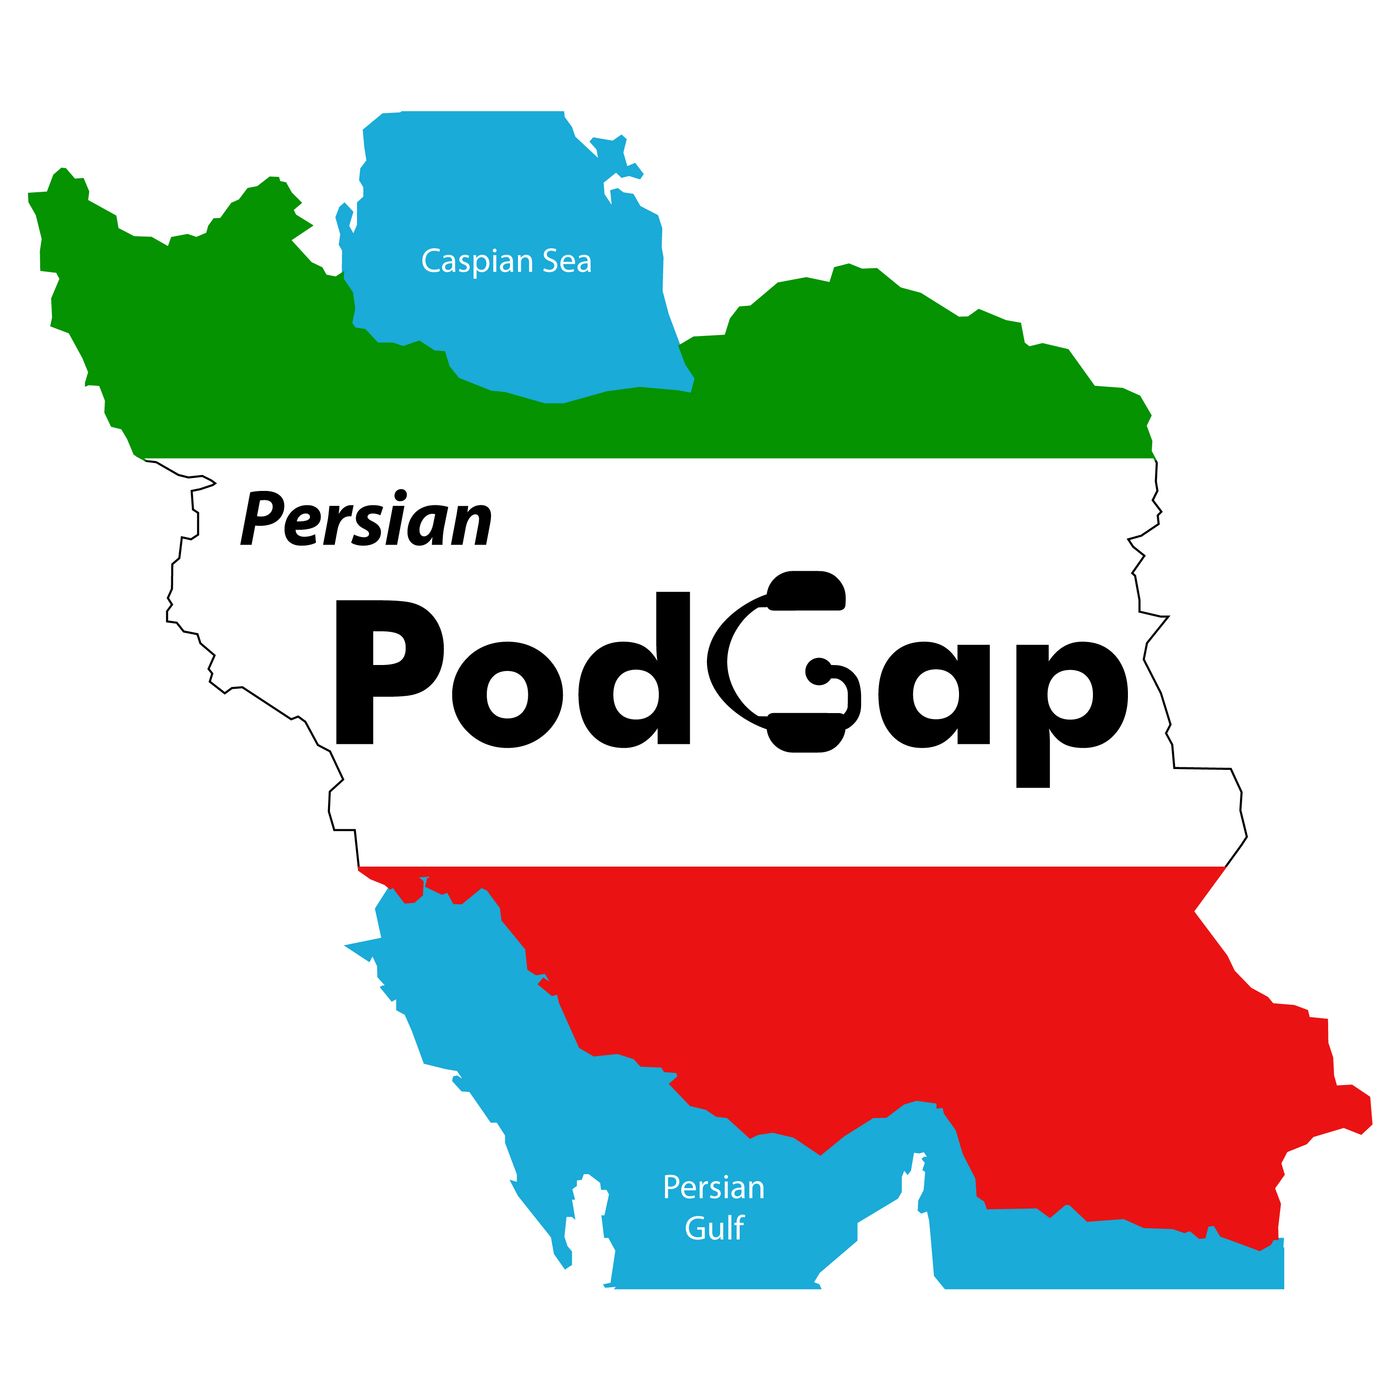 Podgap (93) | Persian Discussion (Adv.): Ghormeh Sabzi in Space